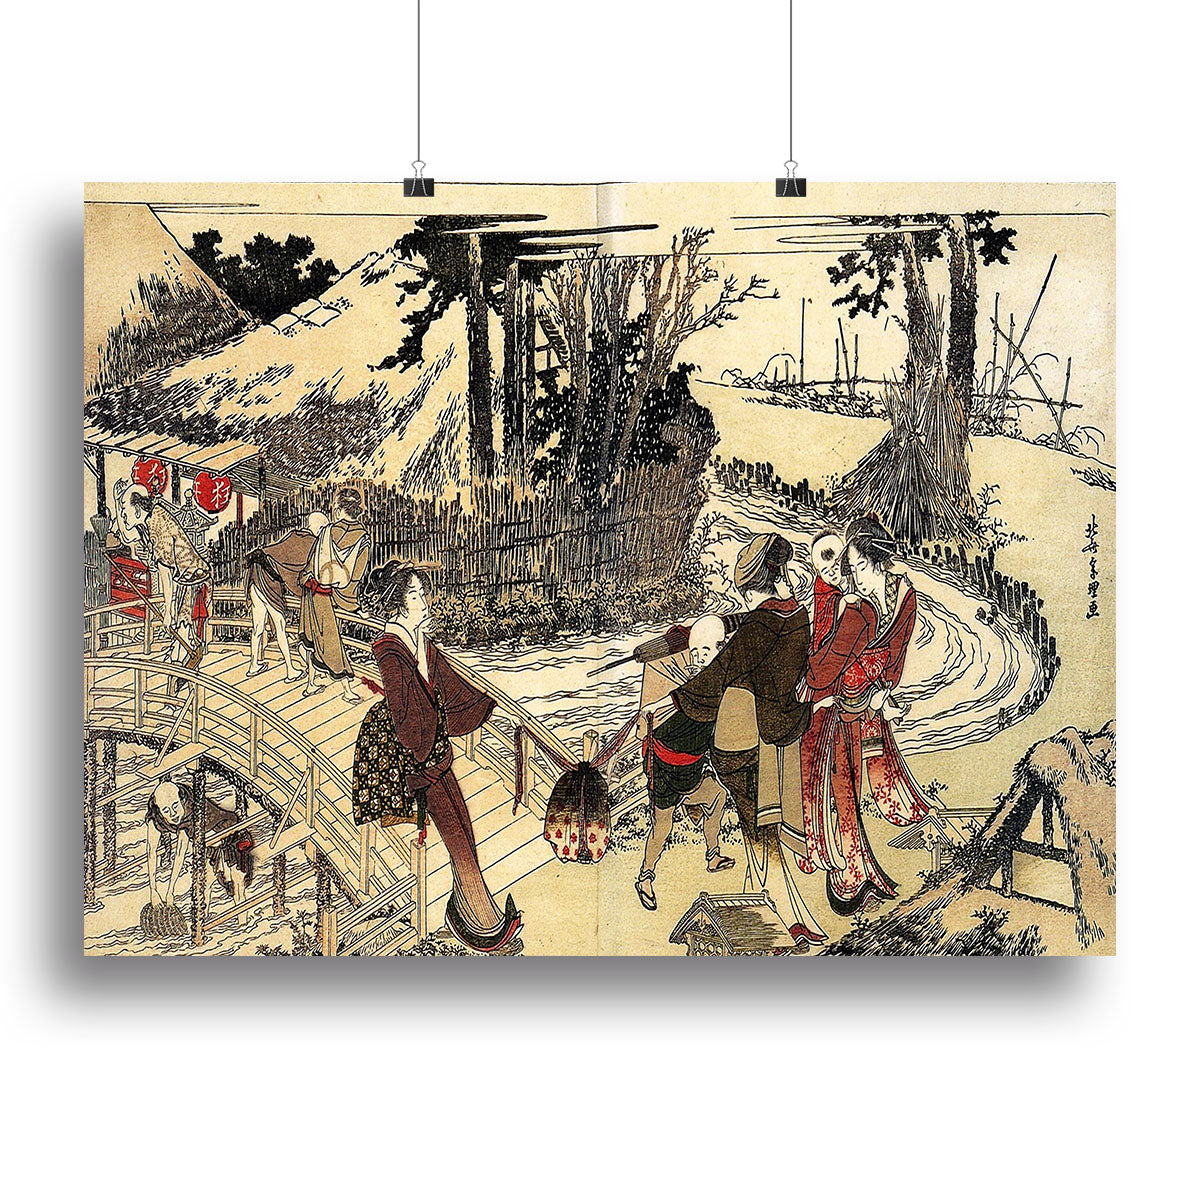 Village near a bridge by Hokusai Canvas Print or Poster - Canvas Art Rocks - 2